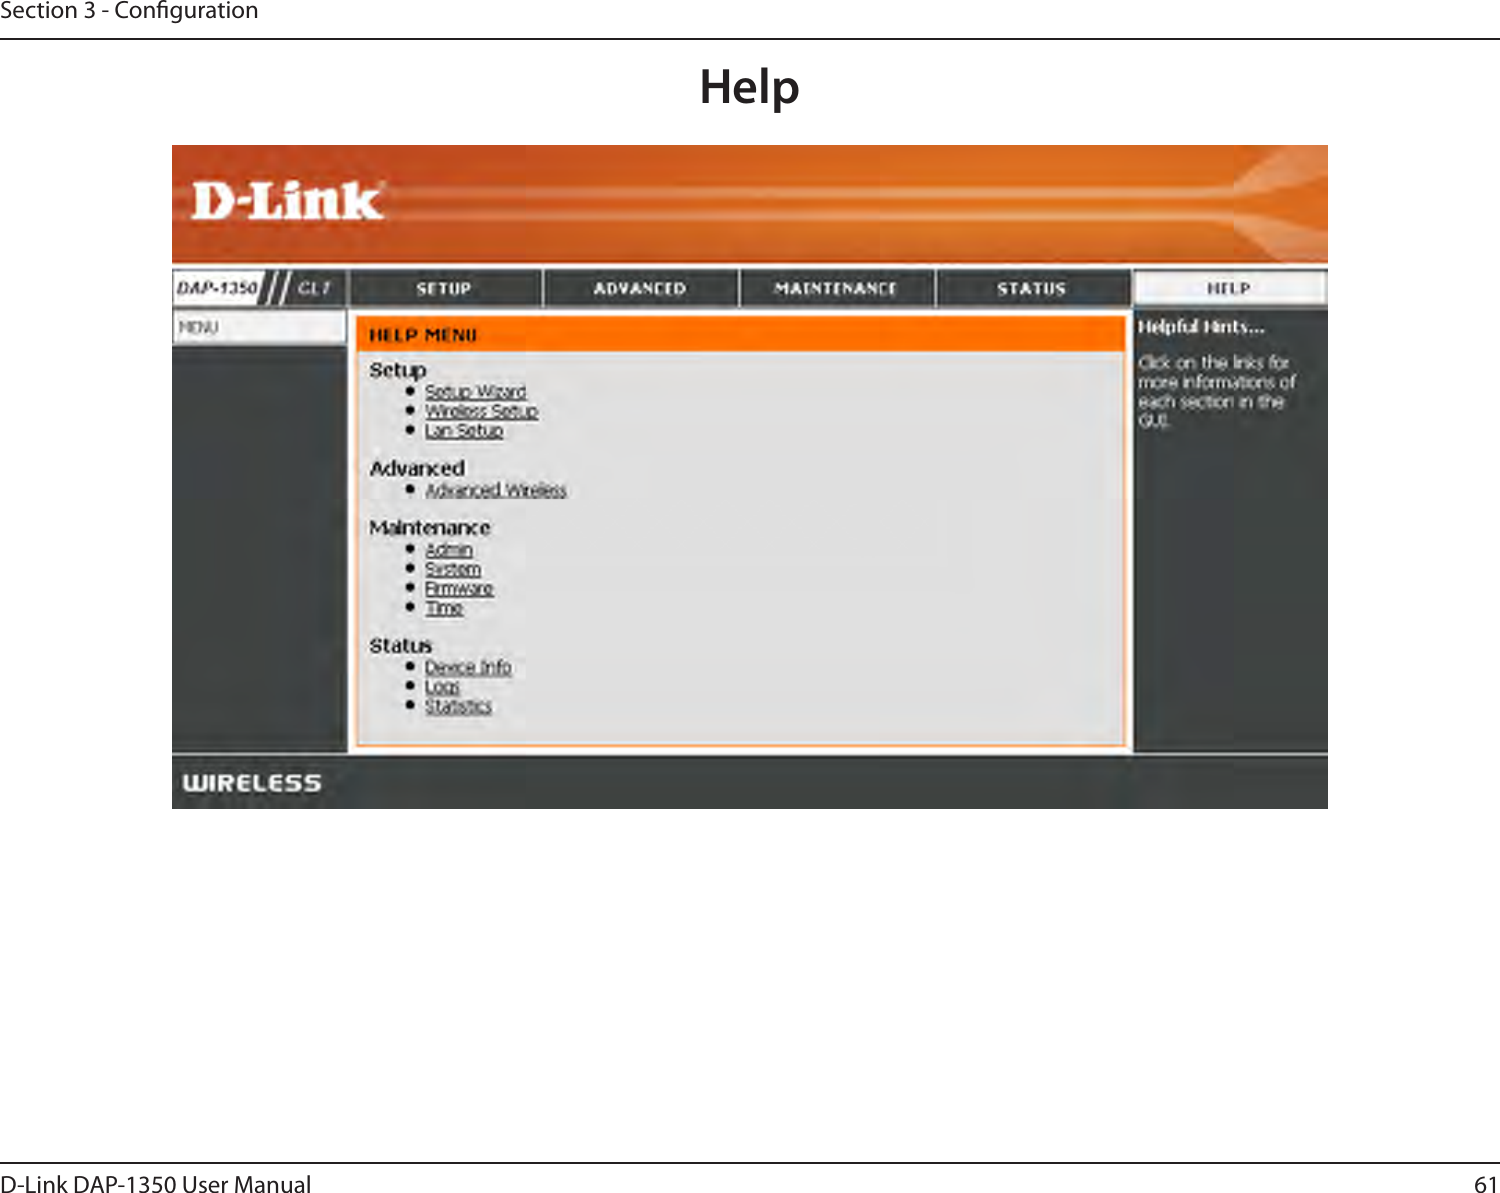 61D-Link DAP-1350 User ManualSection 3 - CongurationHelp